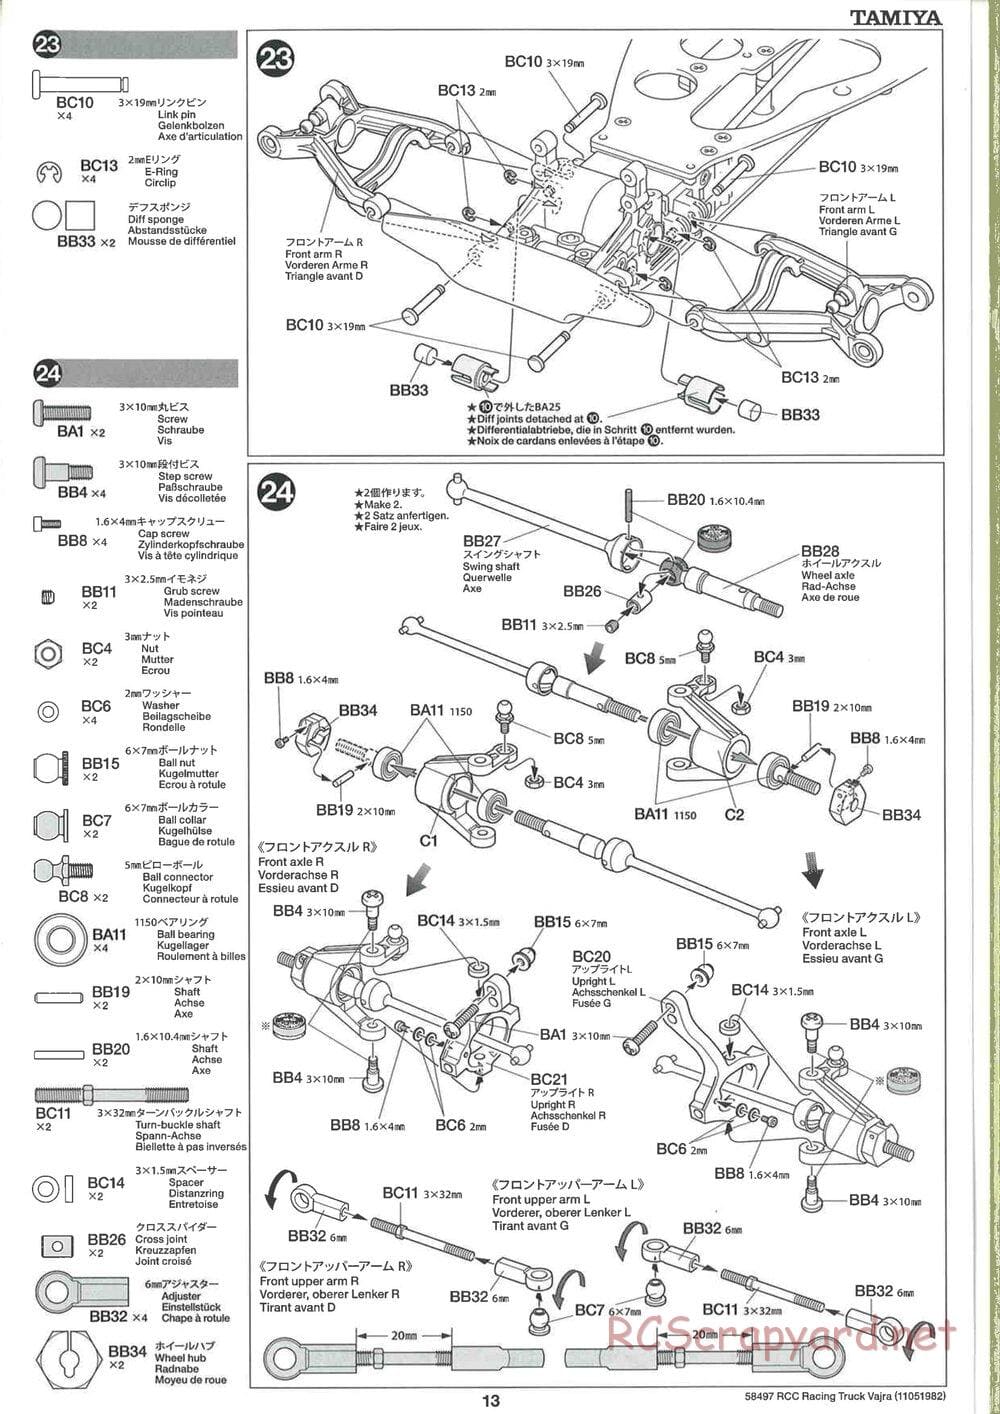 Tamiya - Vajra - AV Chassis - Manual - Page 13